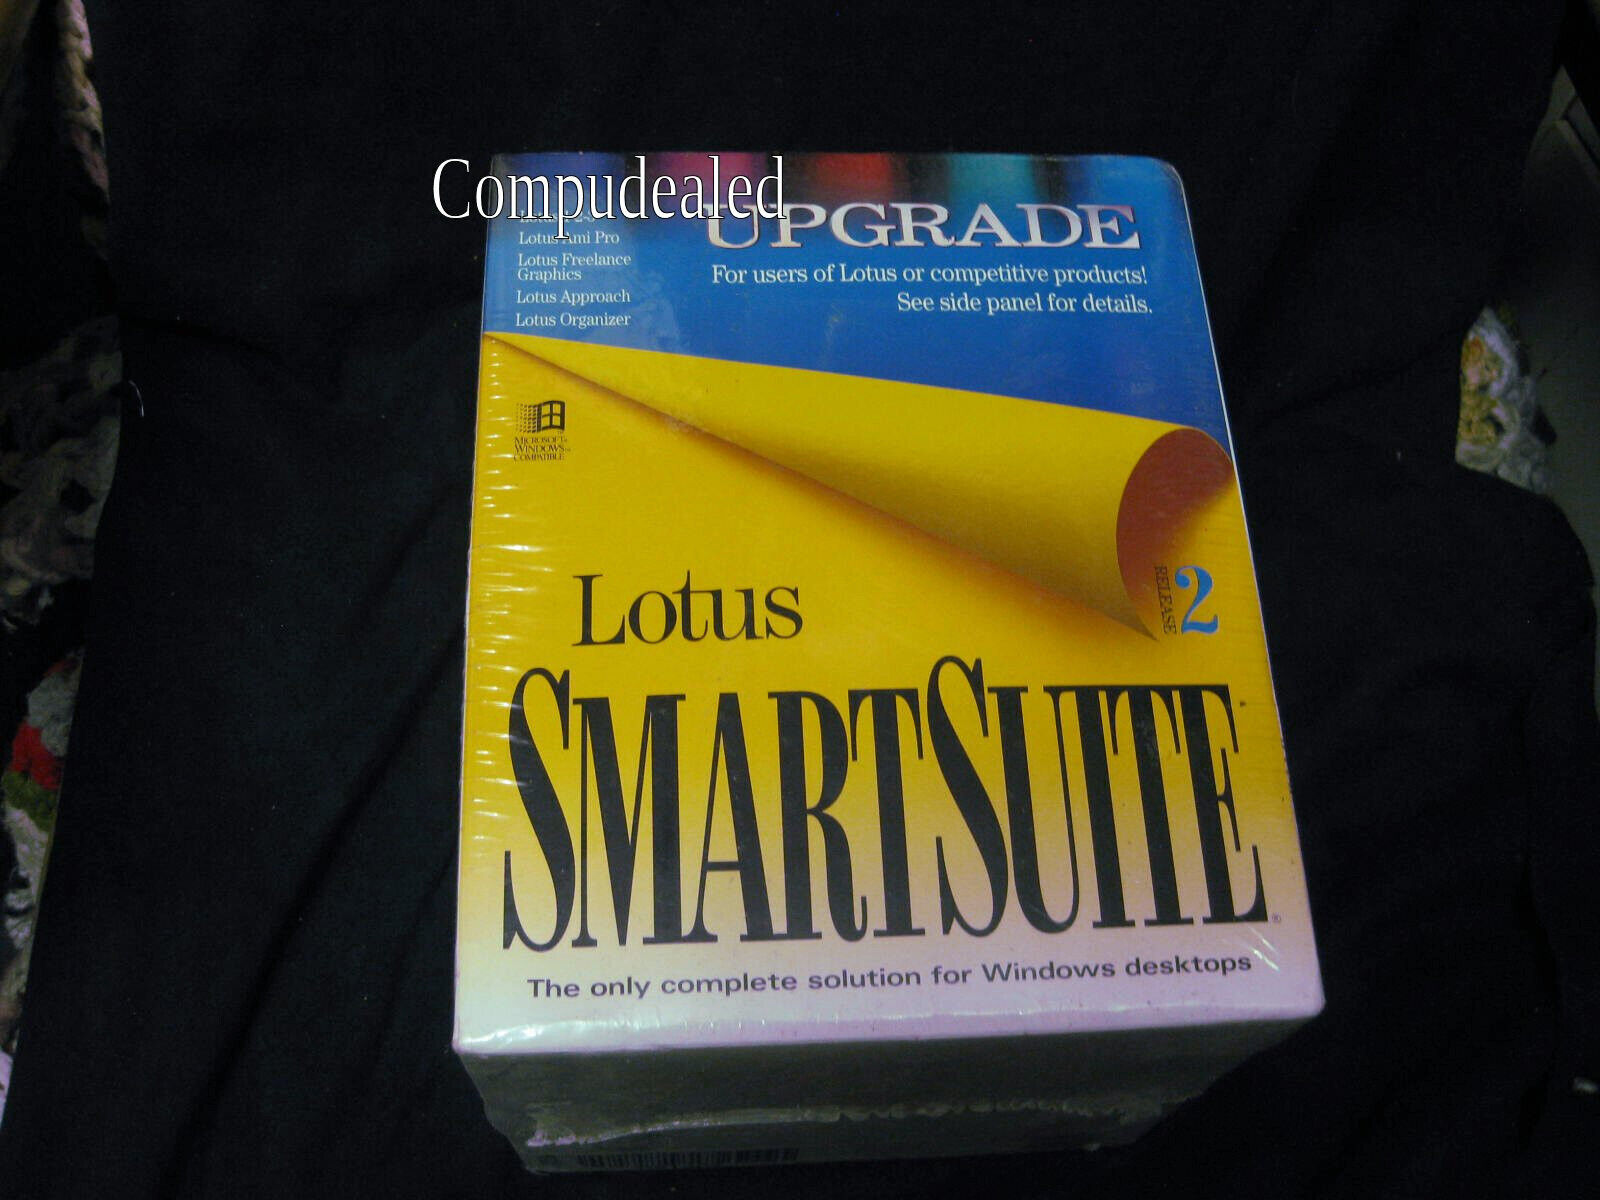 Lotus Smartsuite for Windows